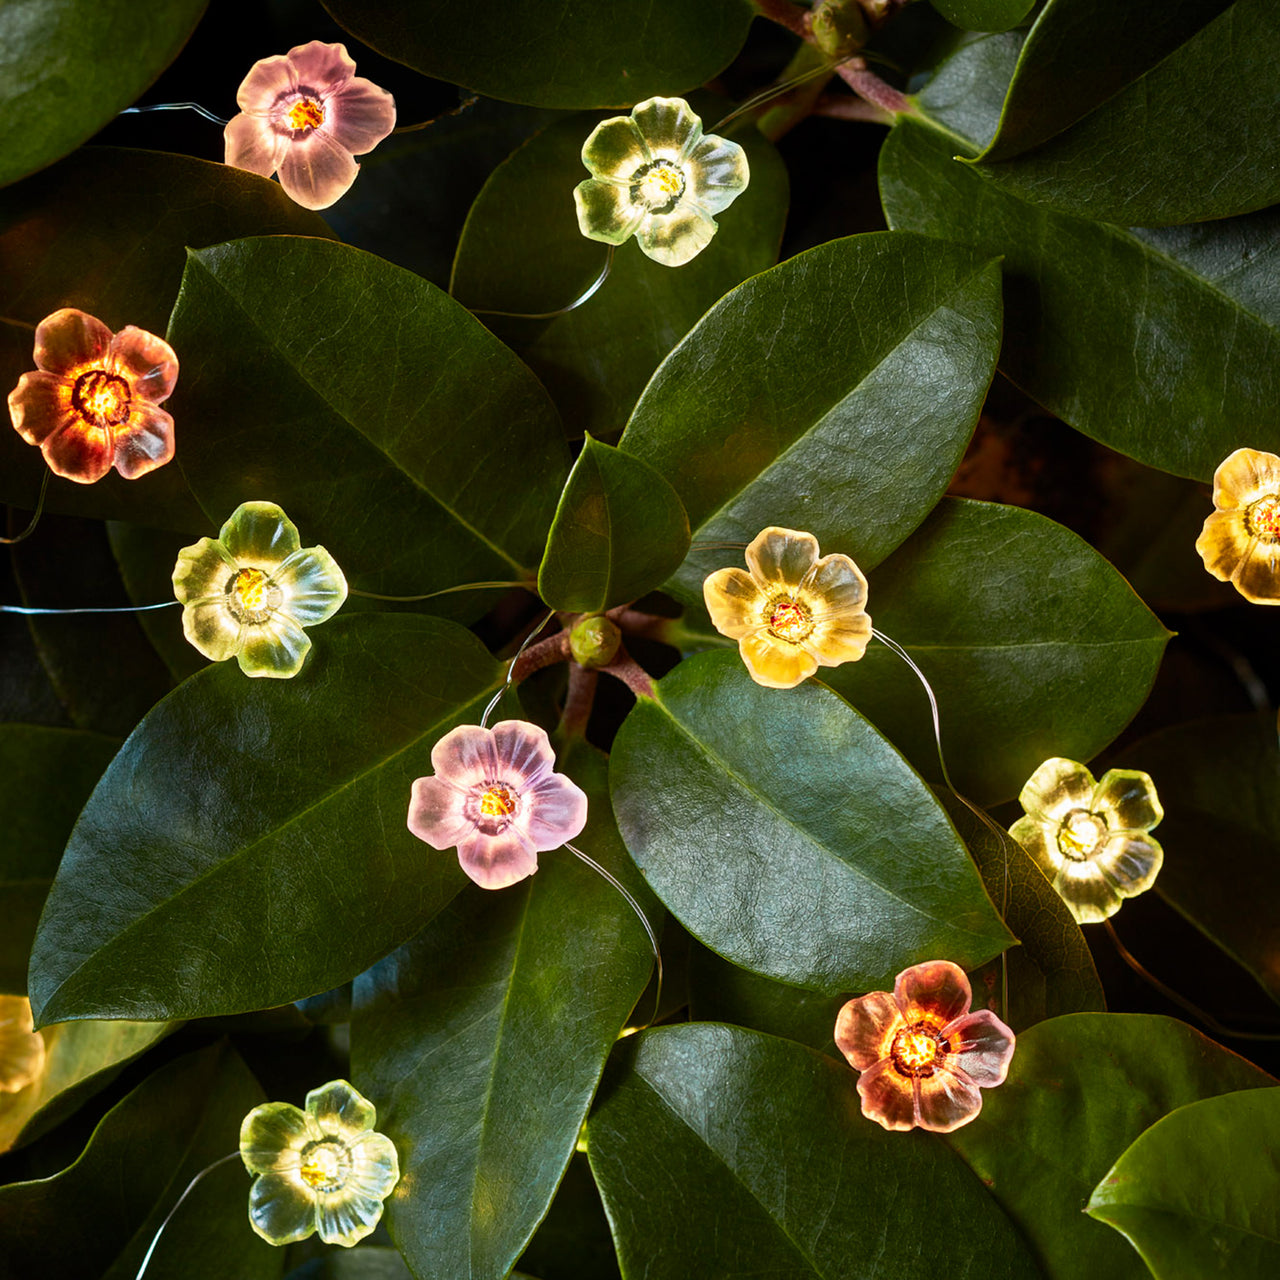 Guirlande Lumineuse de Fleurs de Rose à LED, 20 Guirlandes de